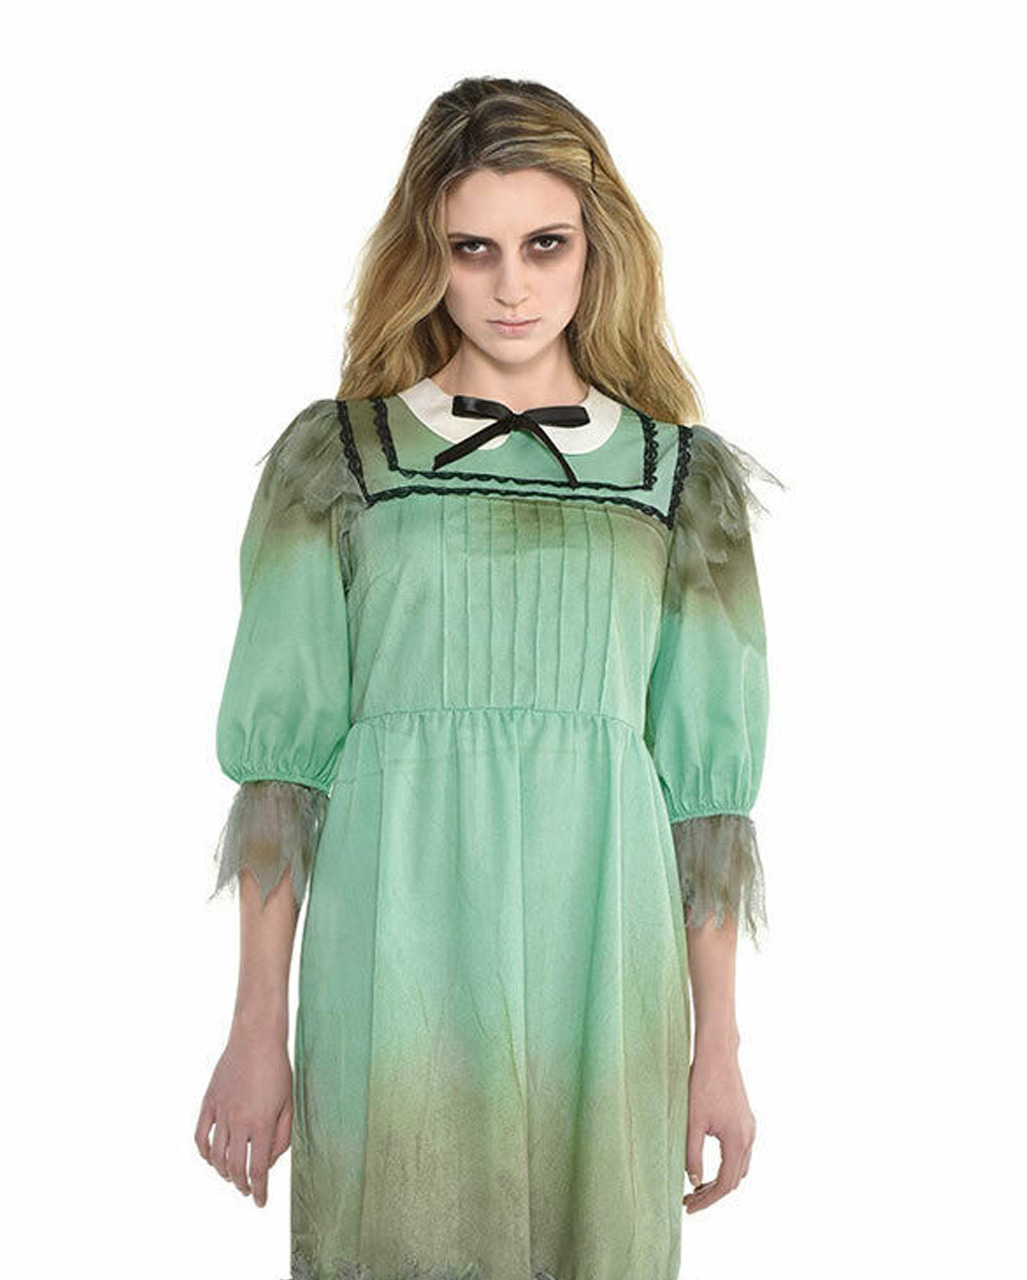 Evil Twin Sister Costume for Halloween 🎃 | Horror-Shop.com